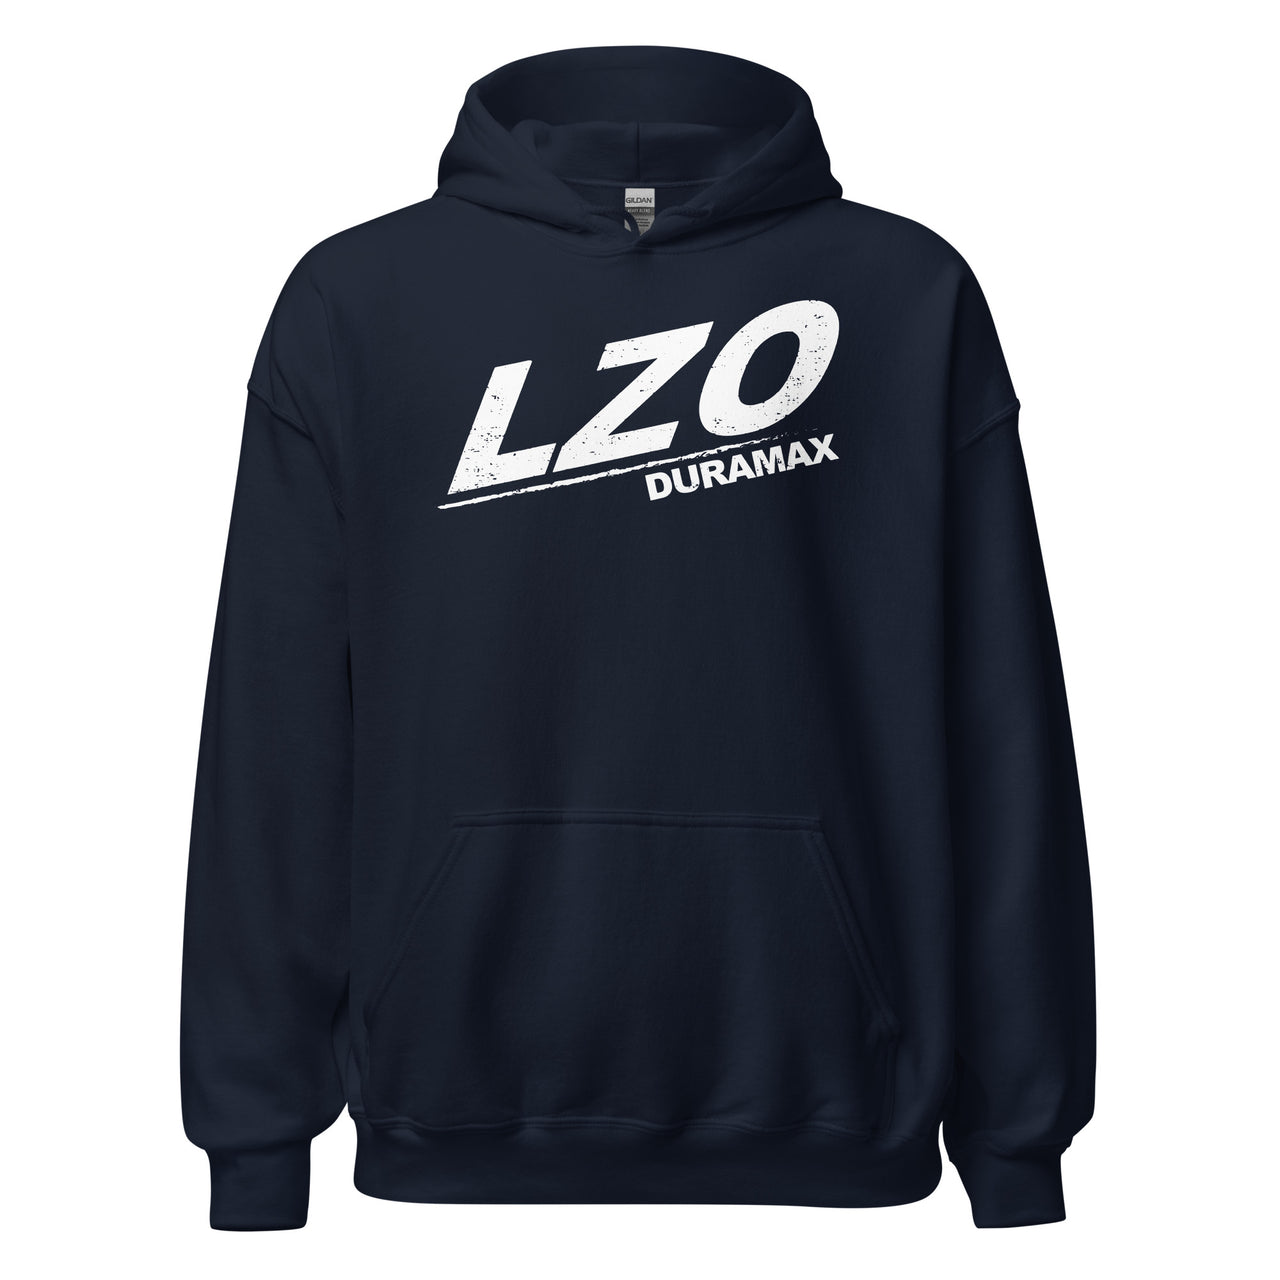 LZO 3.0 Duramax Hoodie Sweatshirt With American Flag Design front in navy